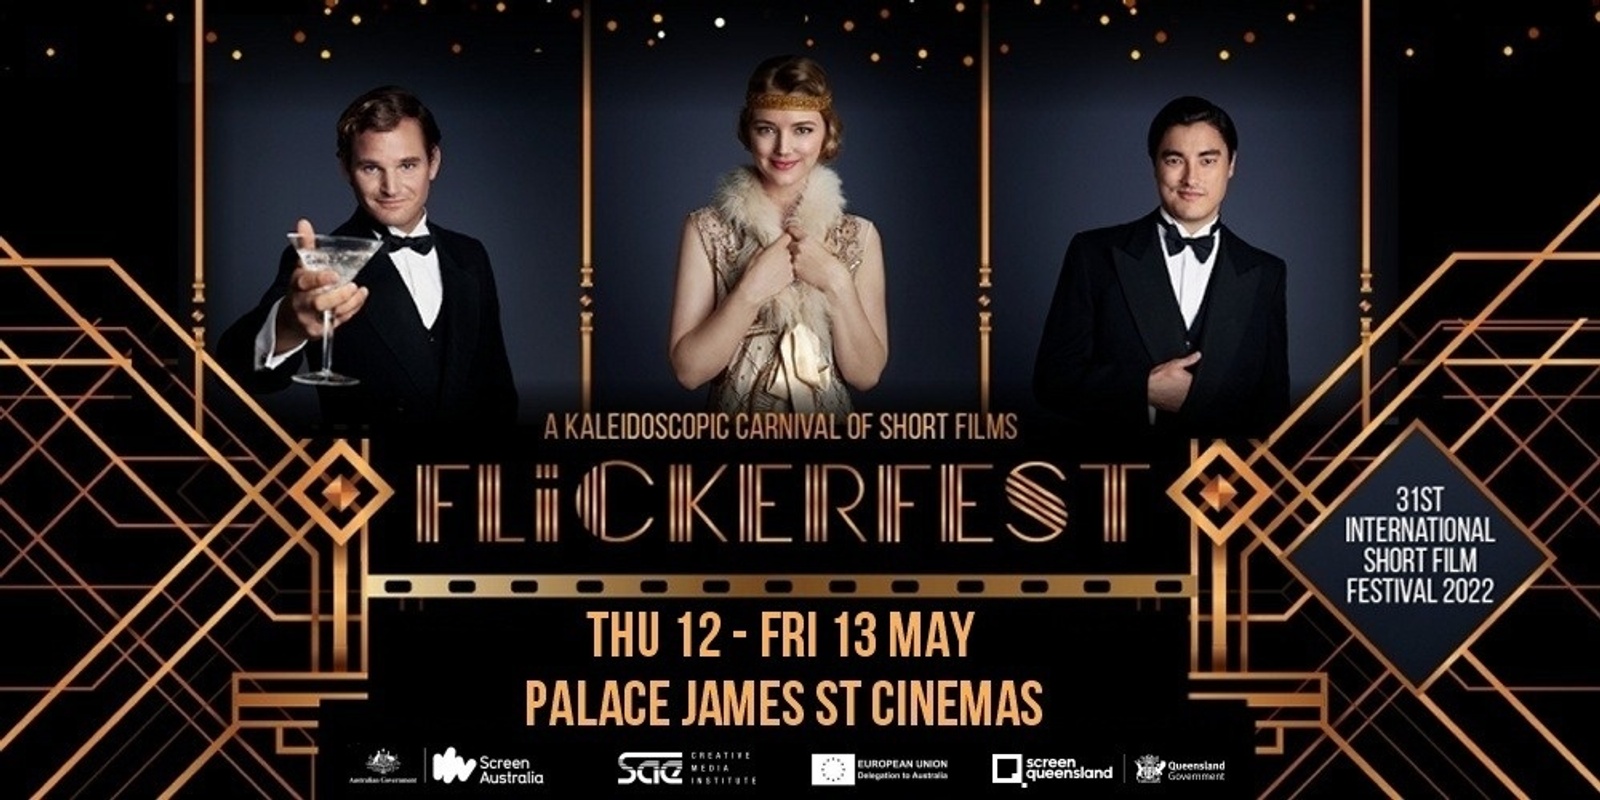 Banner image for Brisbane Flickerfest 2022 Short Film Festival Tour